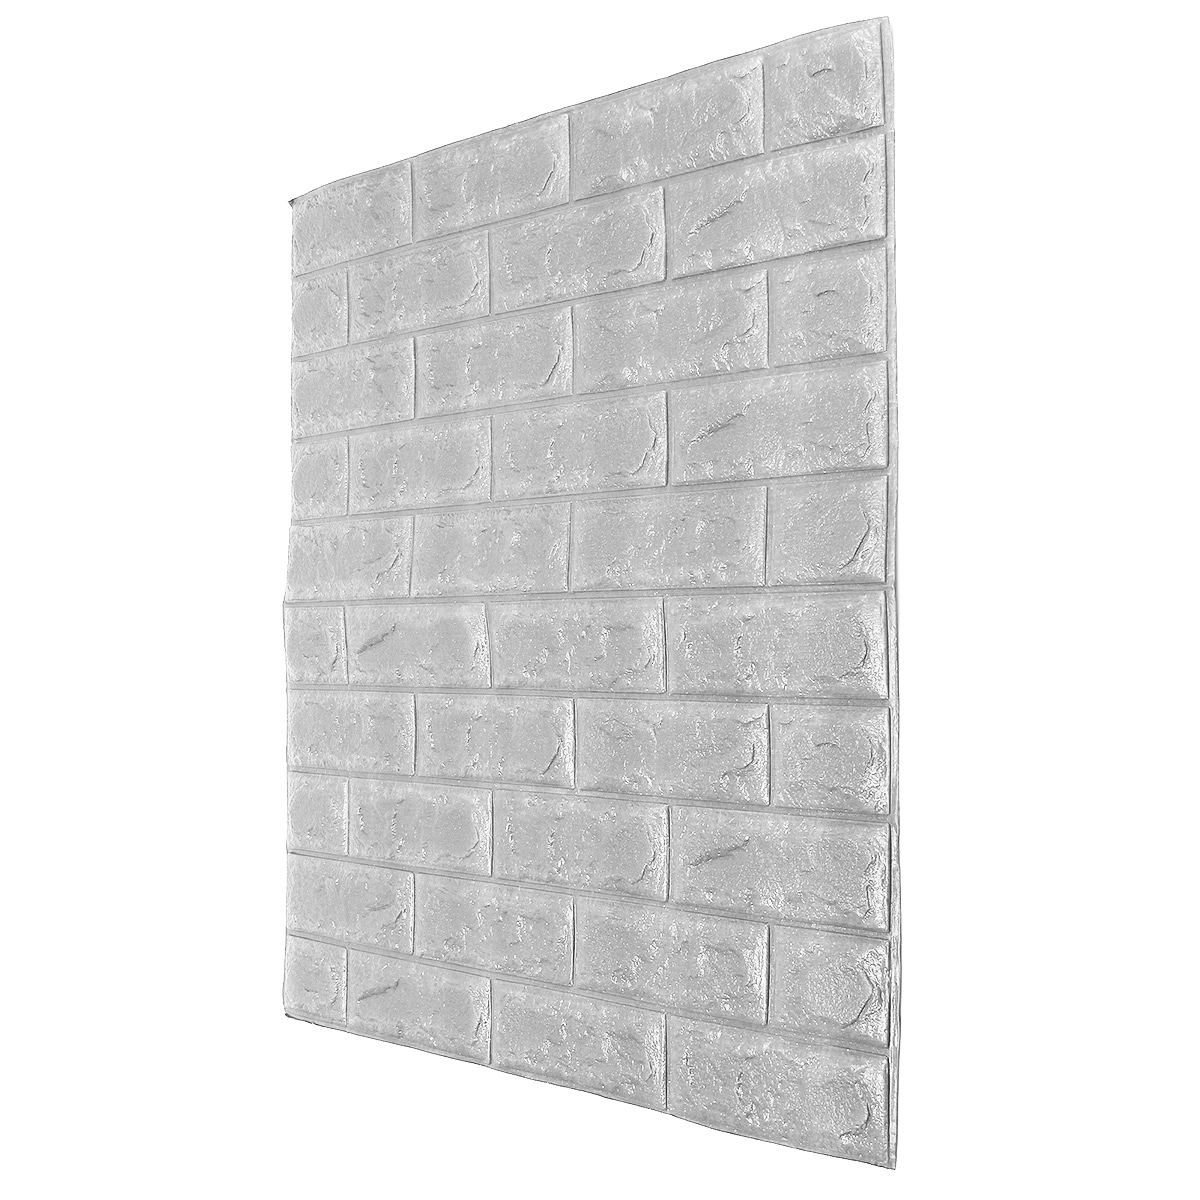 3D-Brick-Pattern-Wallpaper-Bedroom-Living-Room-Modern-Wall-Sticker-TV-Background-Decor-1195902-3